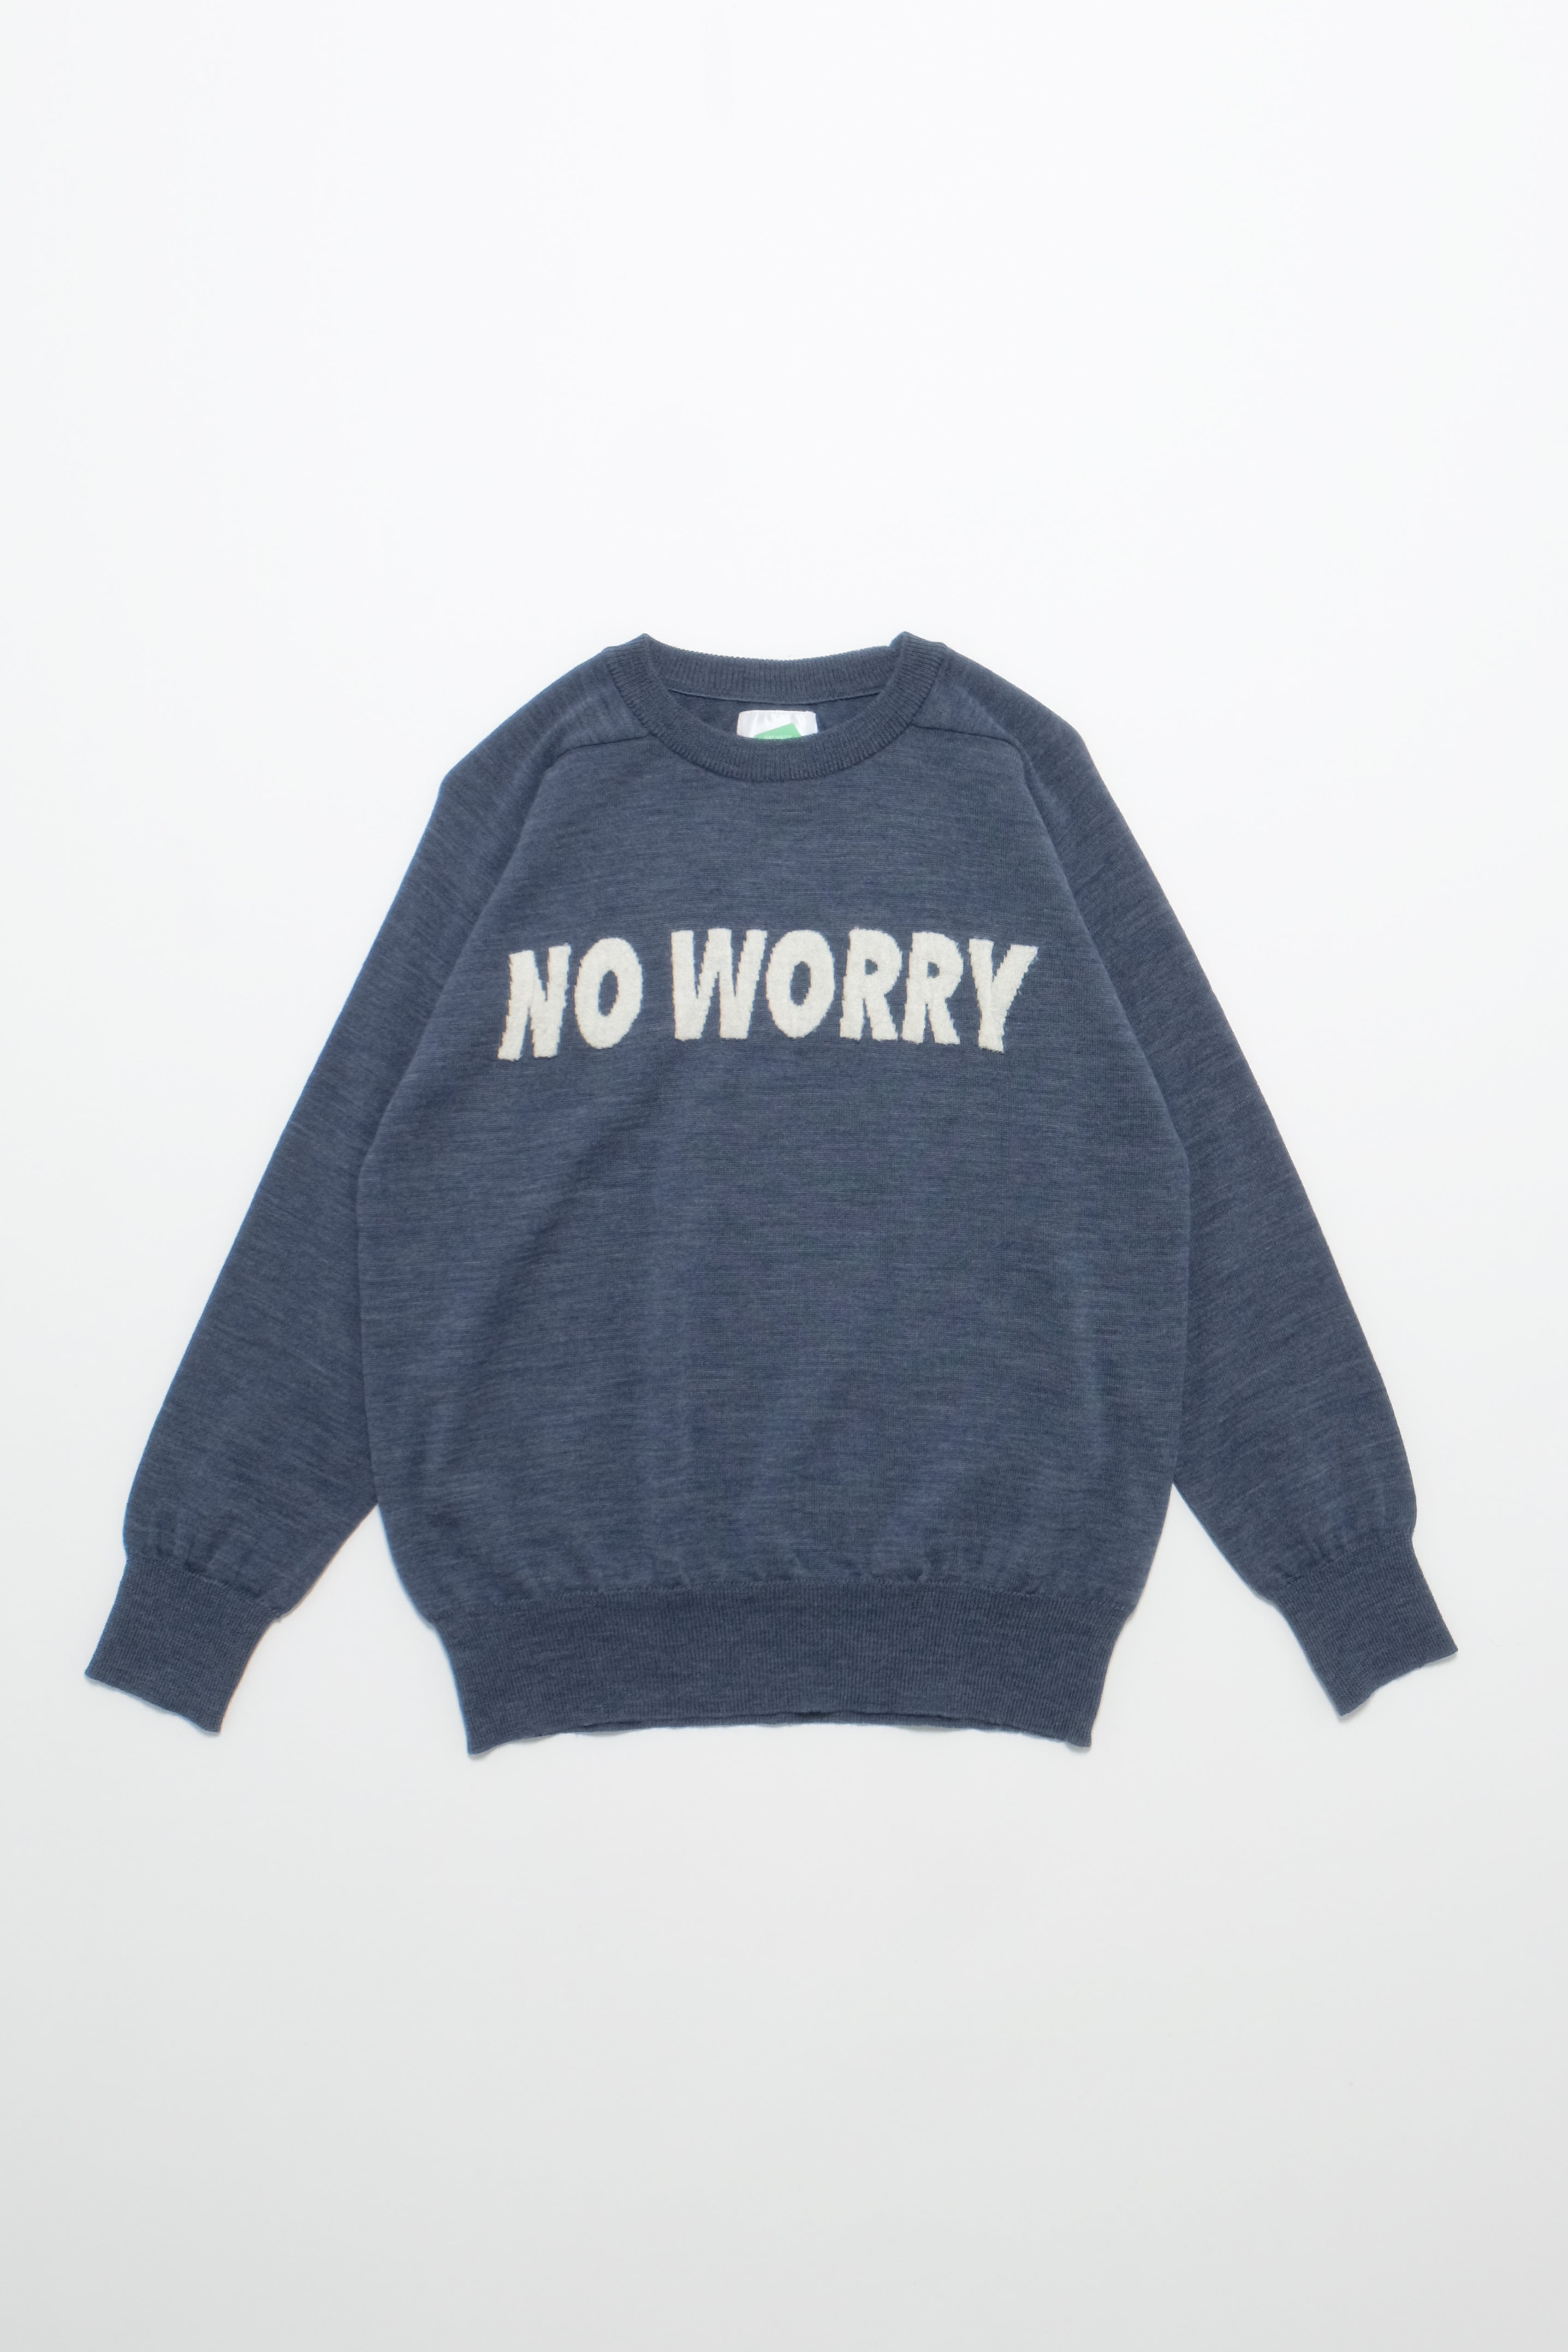 Wool Jacquard Crewneck Knit - No Worry - Blue